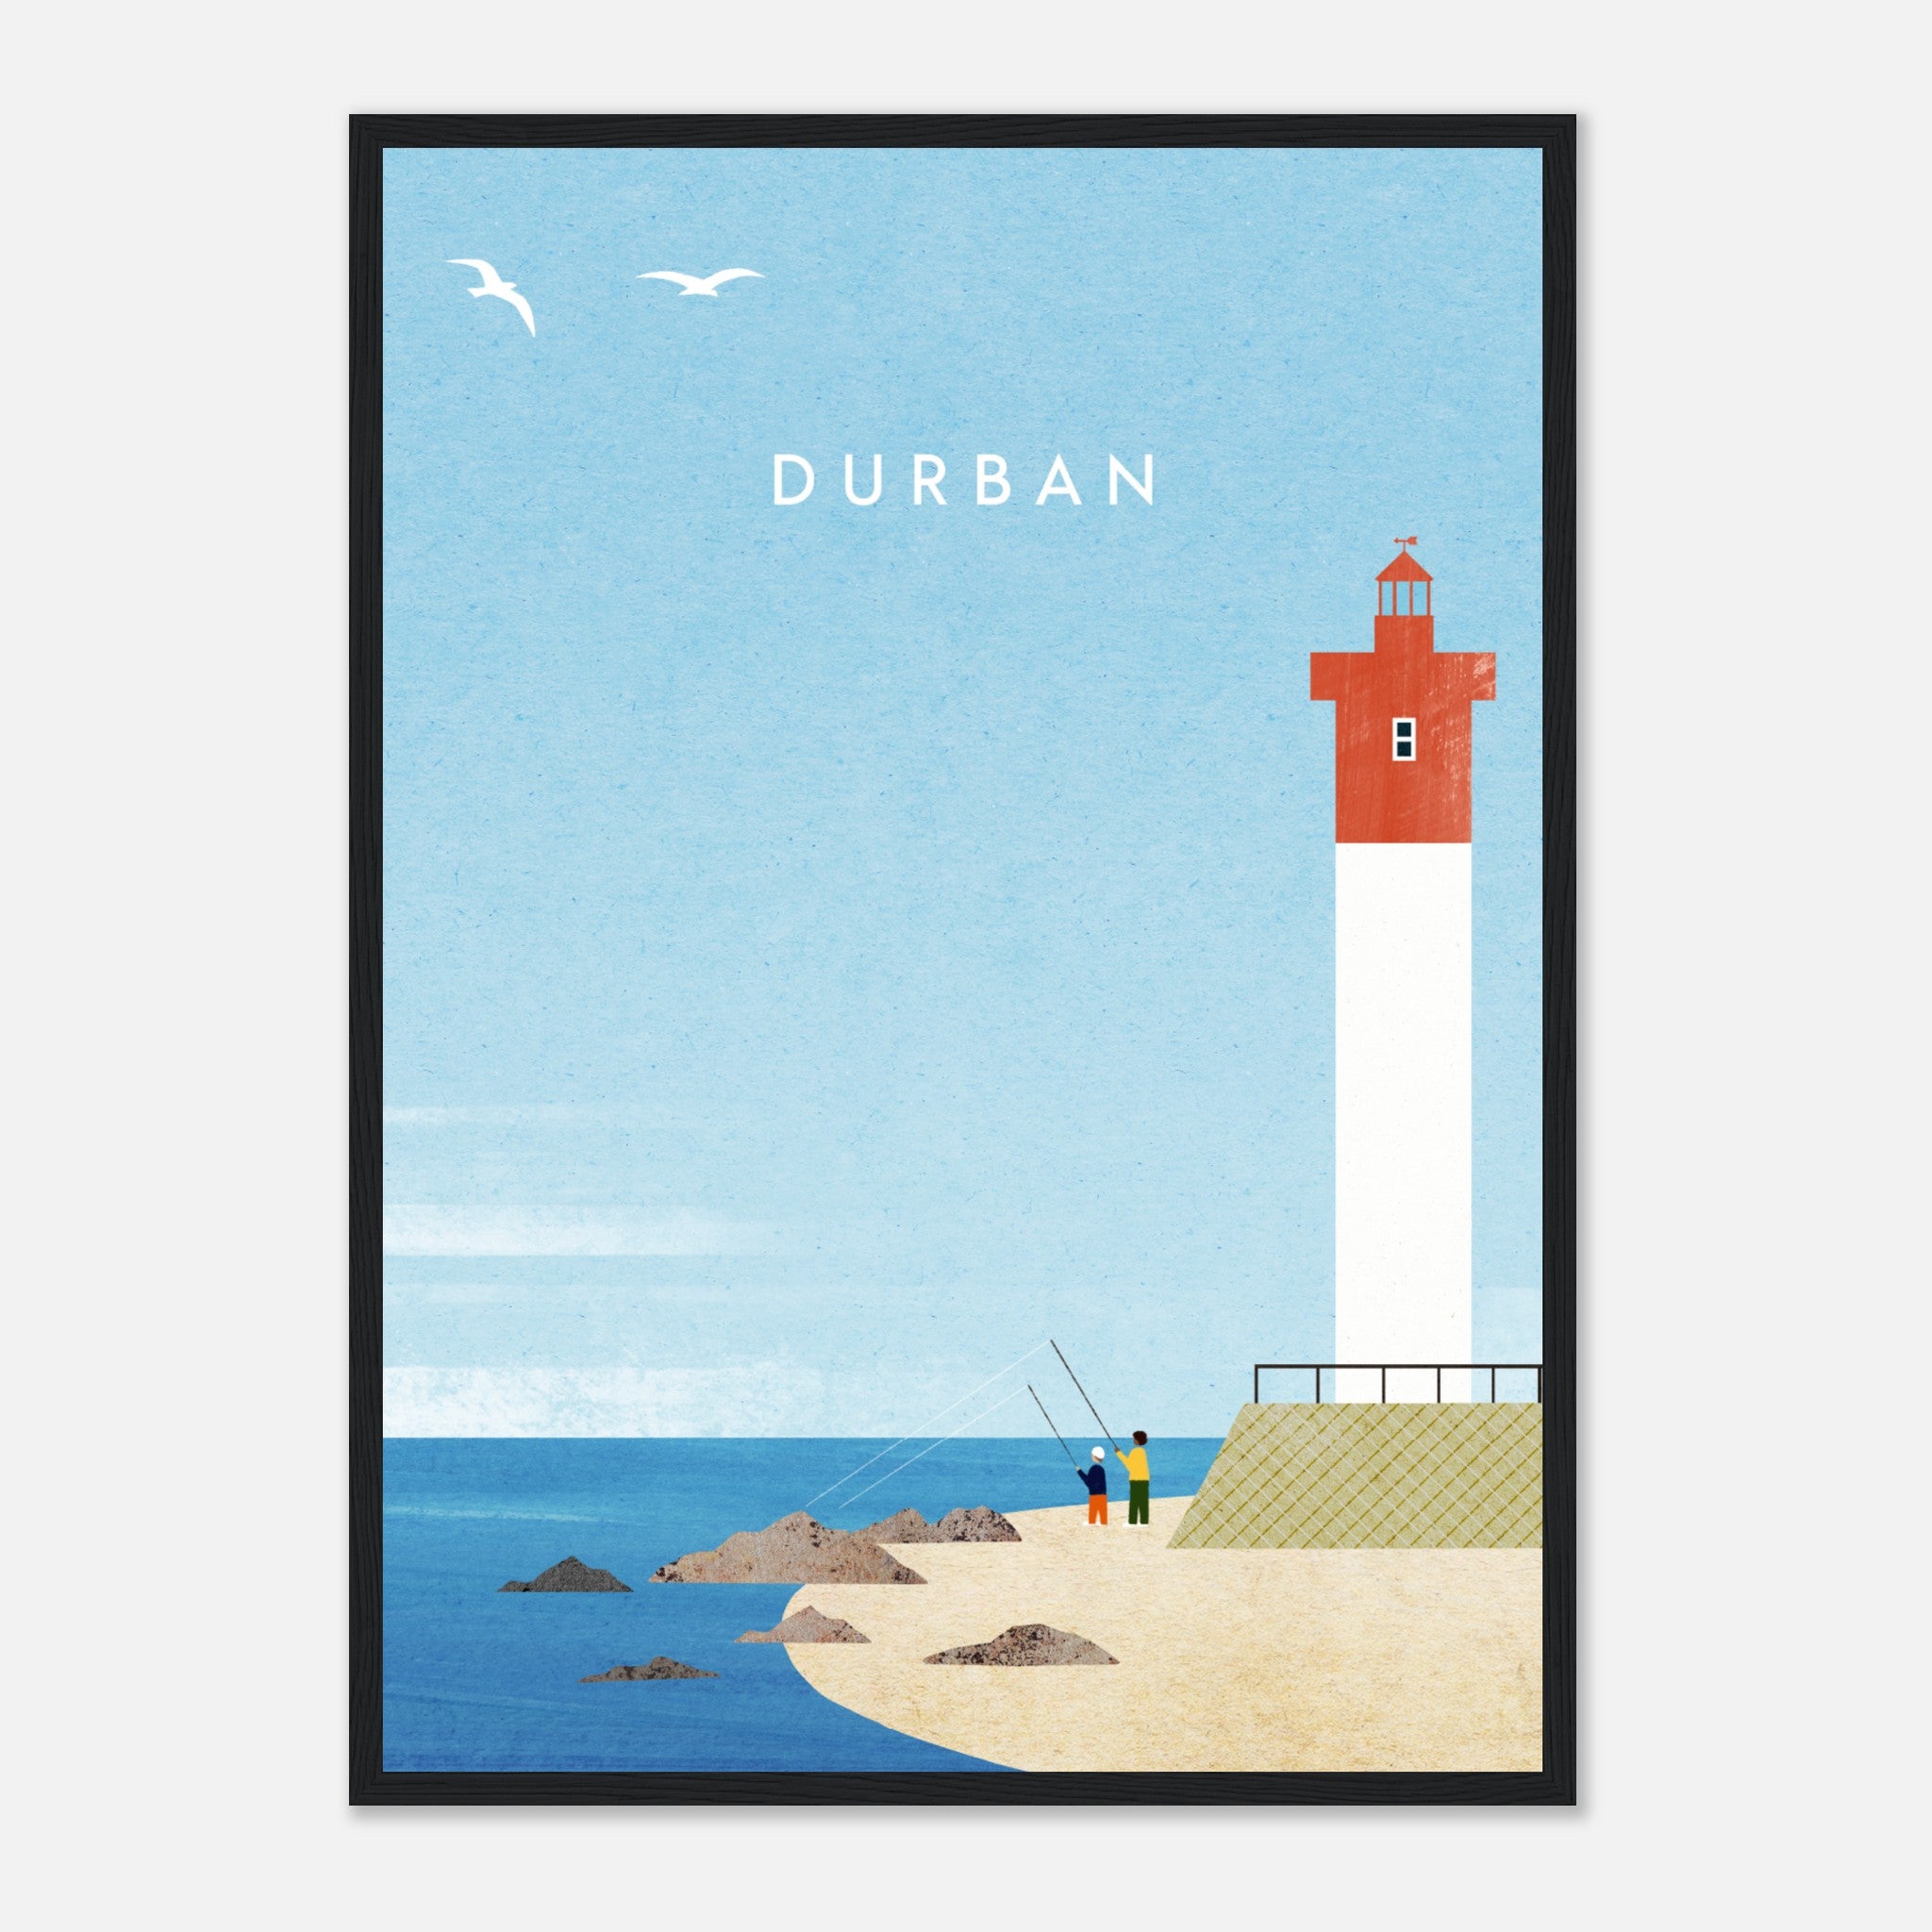 Durban Poster